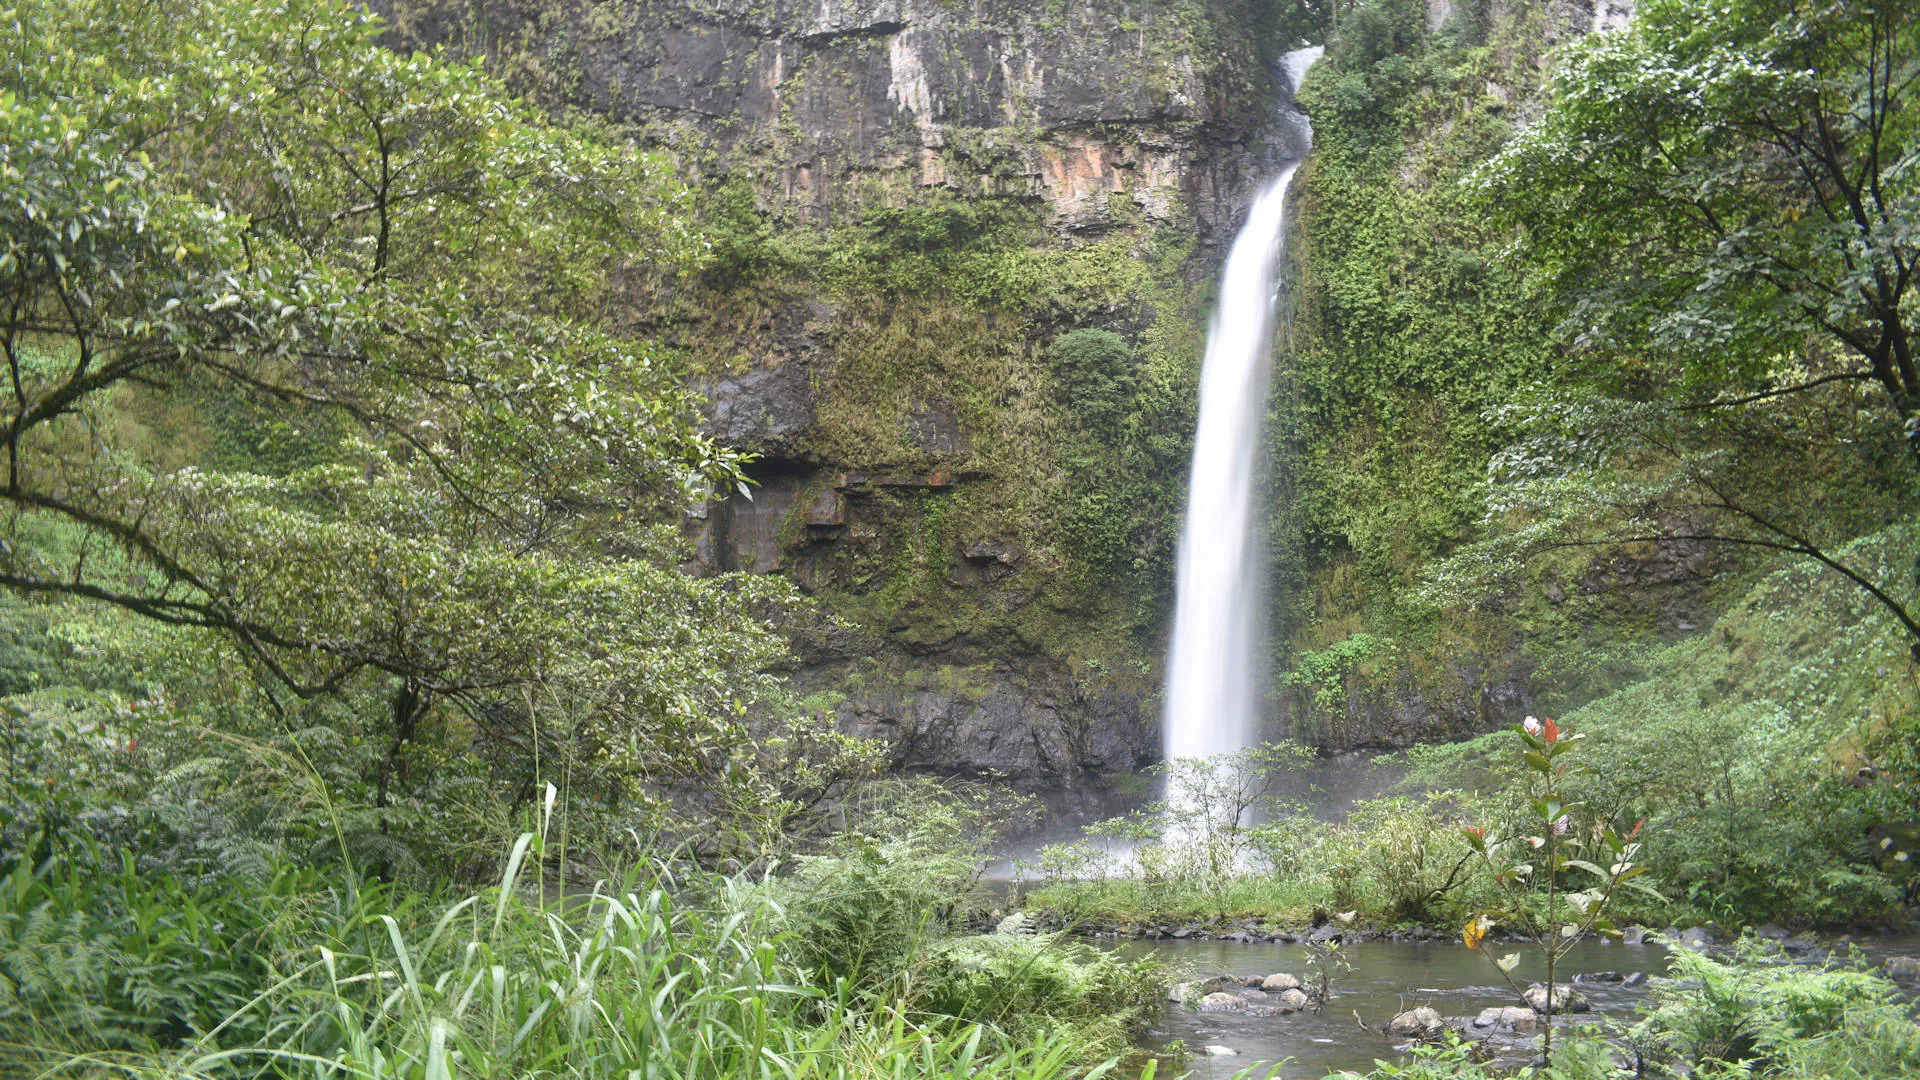 Nandroya Falls on the walk from Henrietta Creek Campground